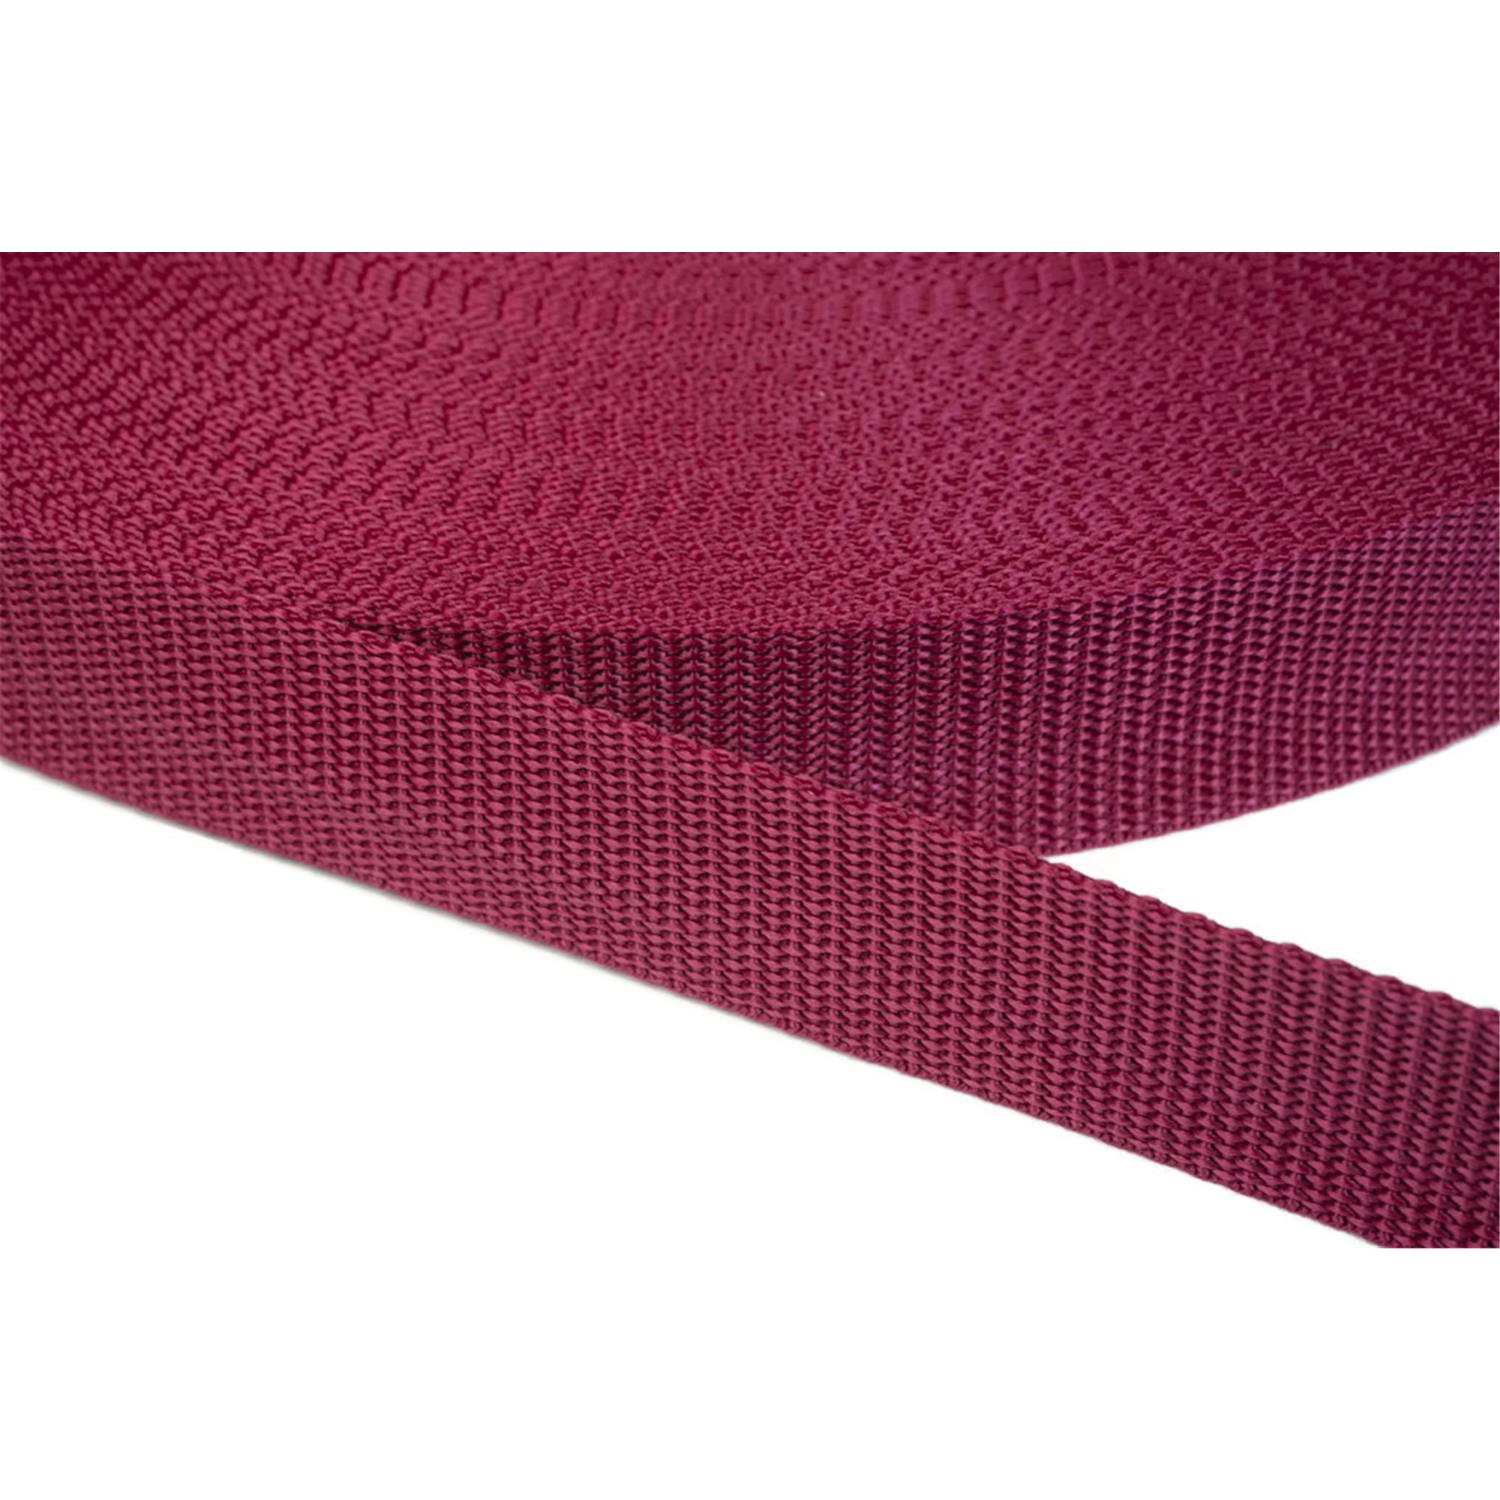 Gurtband 50mm breit aus Polypropylen in 41 Farben 21 - dunkelrot 6 Meter